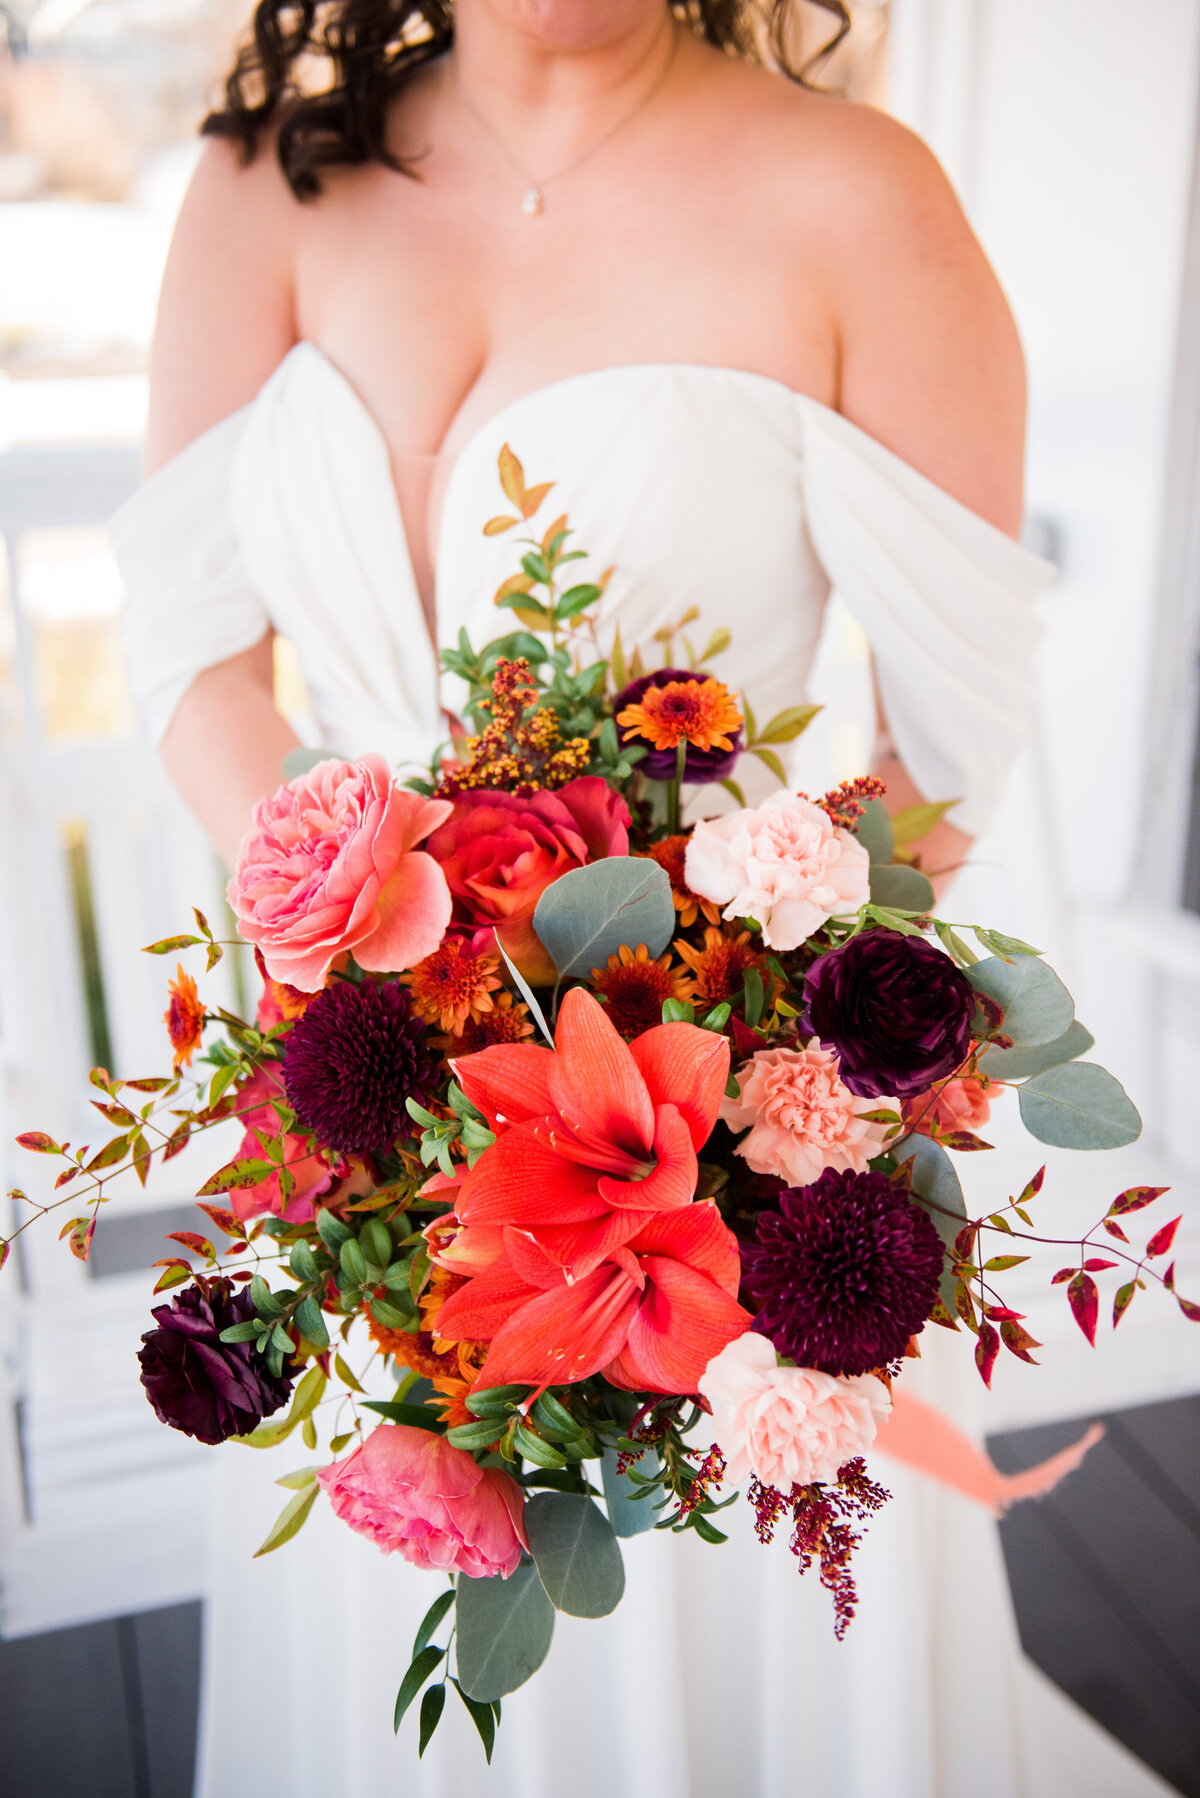 A close up shot of a bride's vibrant, warm colored bouquet.